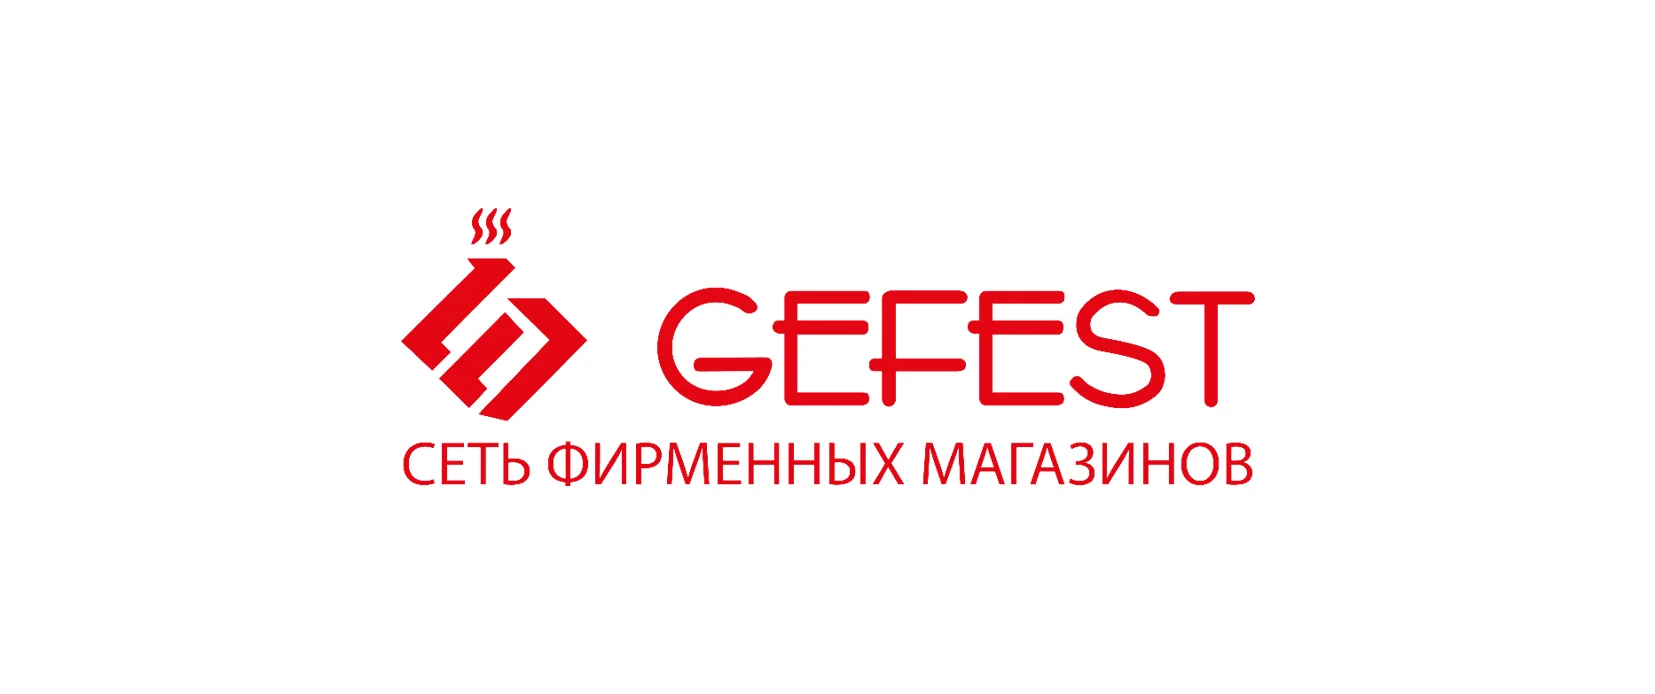 Gefestshop.by - интернет-магазин техники GEFEST